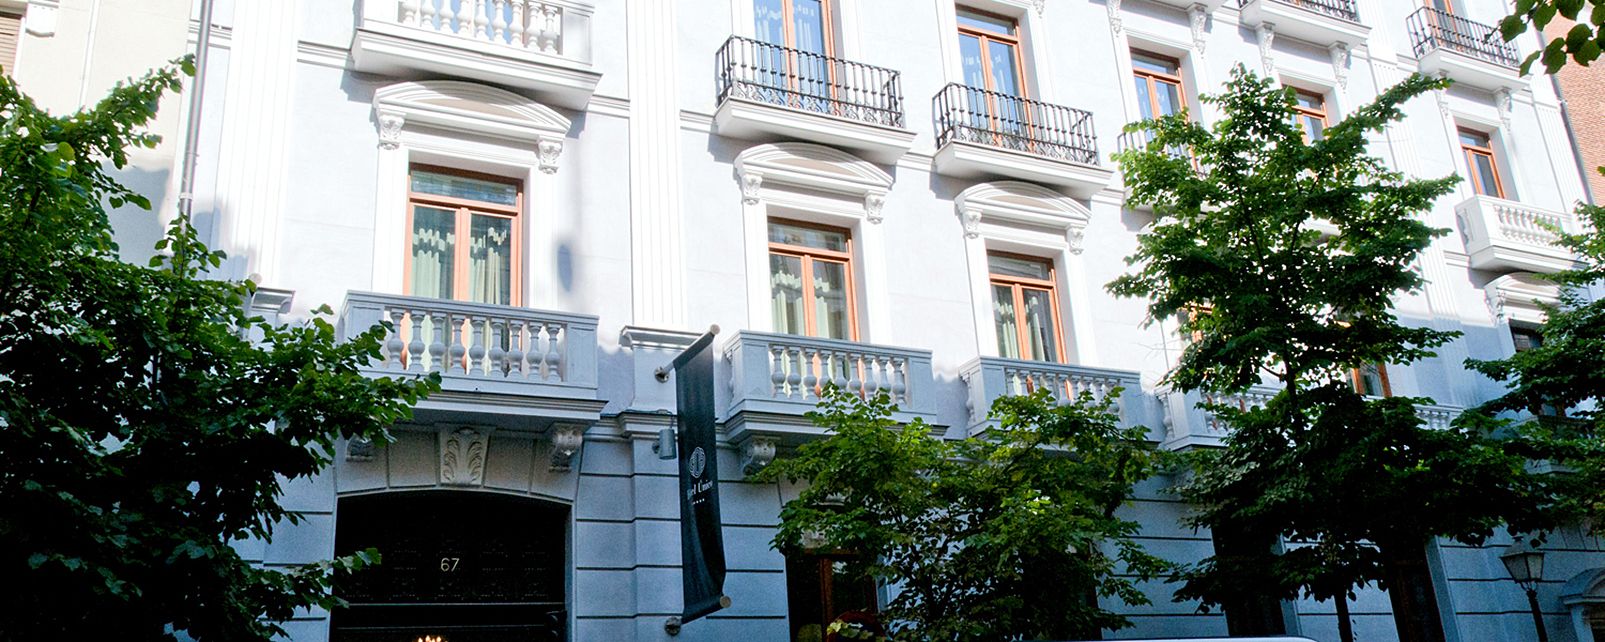 Hotel Único Madrid